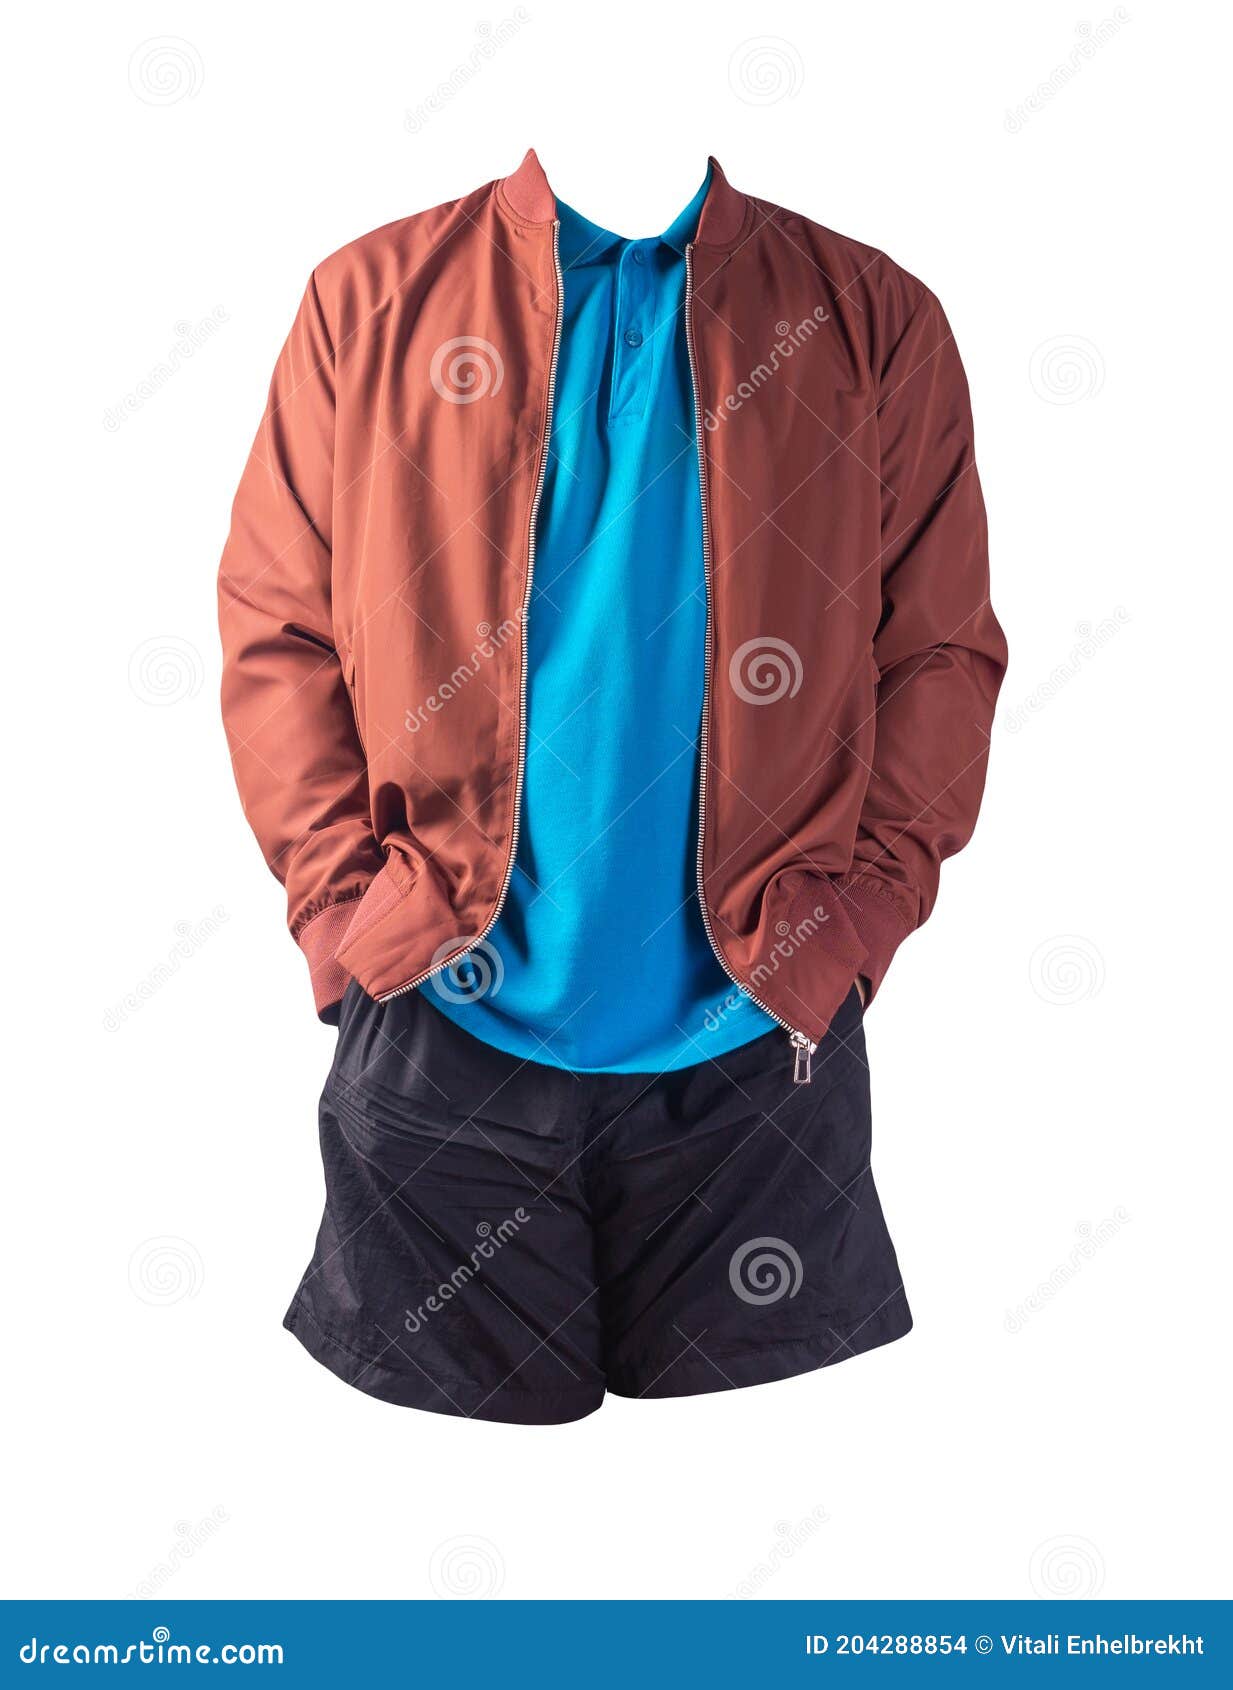 polo shirt and bomber jacket